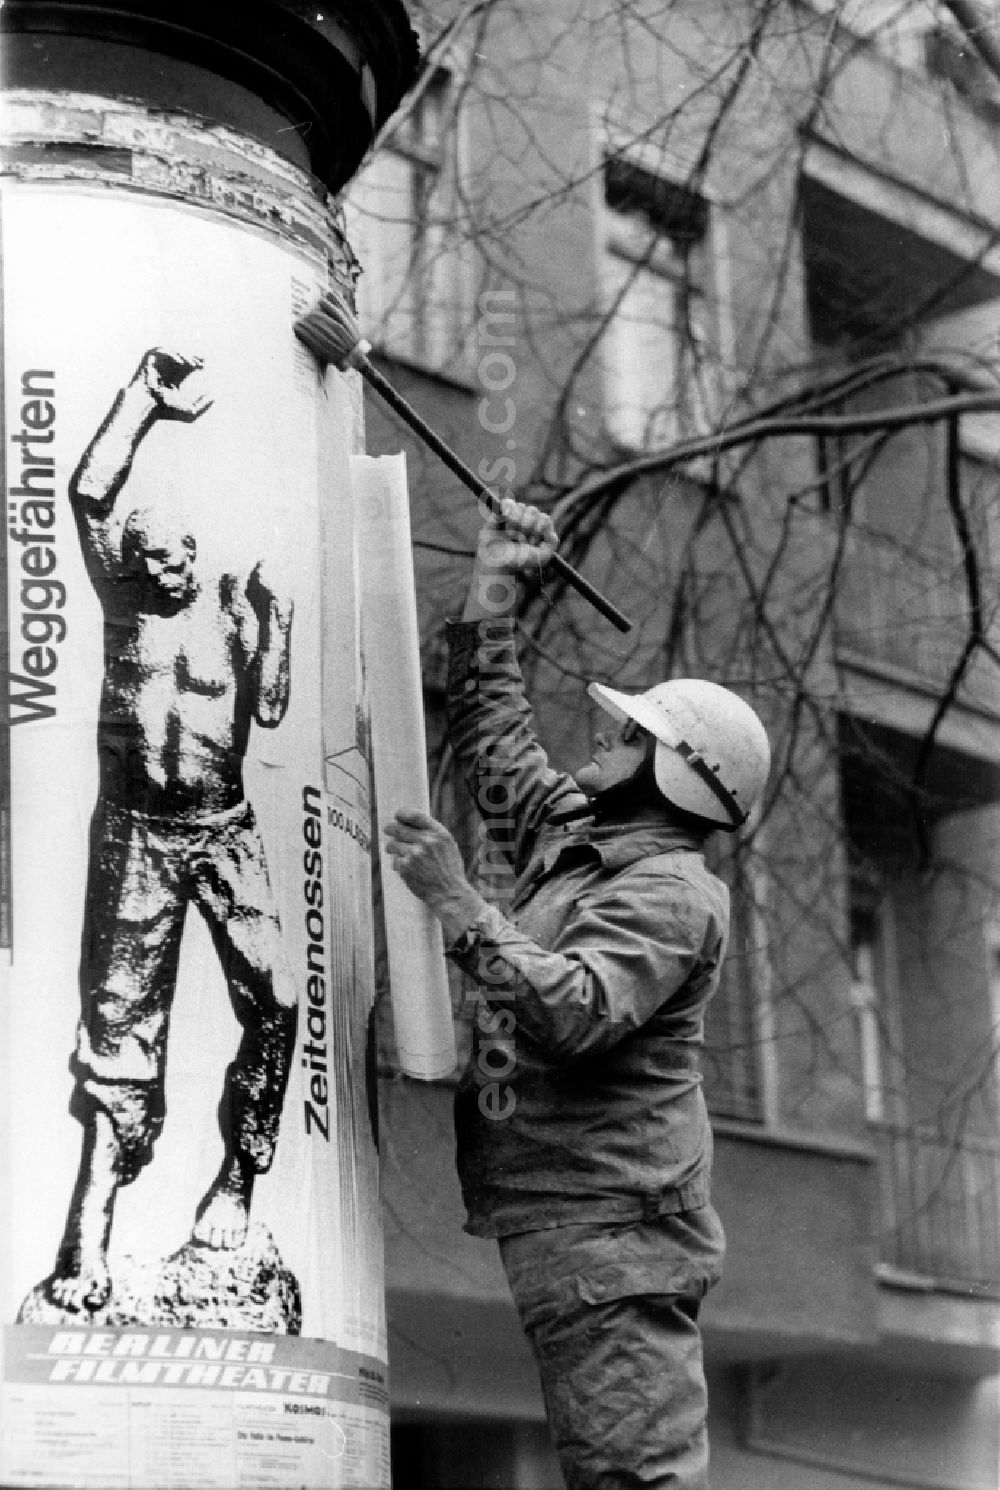 GDR photo archive: Berlin - Advertising for beim Bekleben mit einem Kunstausstellungsplakat on an advertising pillar on a sidewalk in the district Mitte in Berlin Eastberlin on the territory of the former GDR, German Democratic Republic